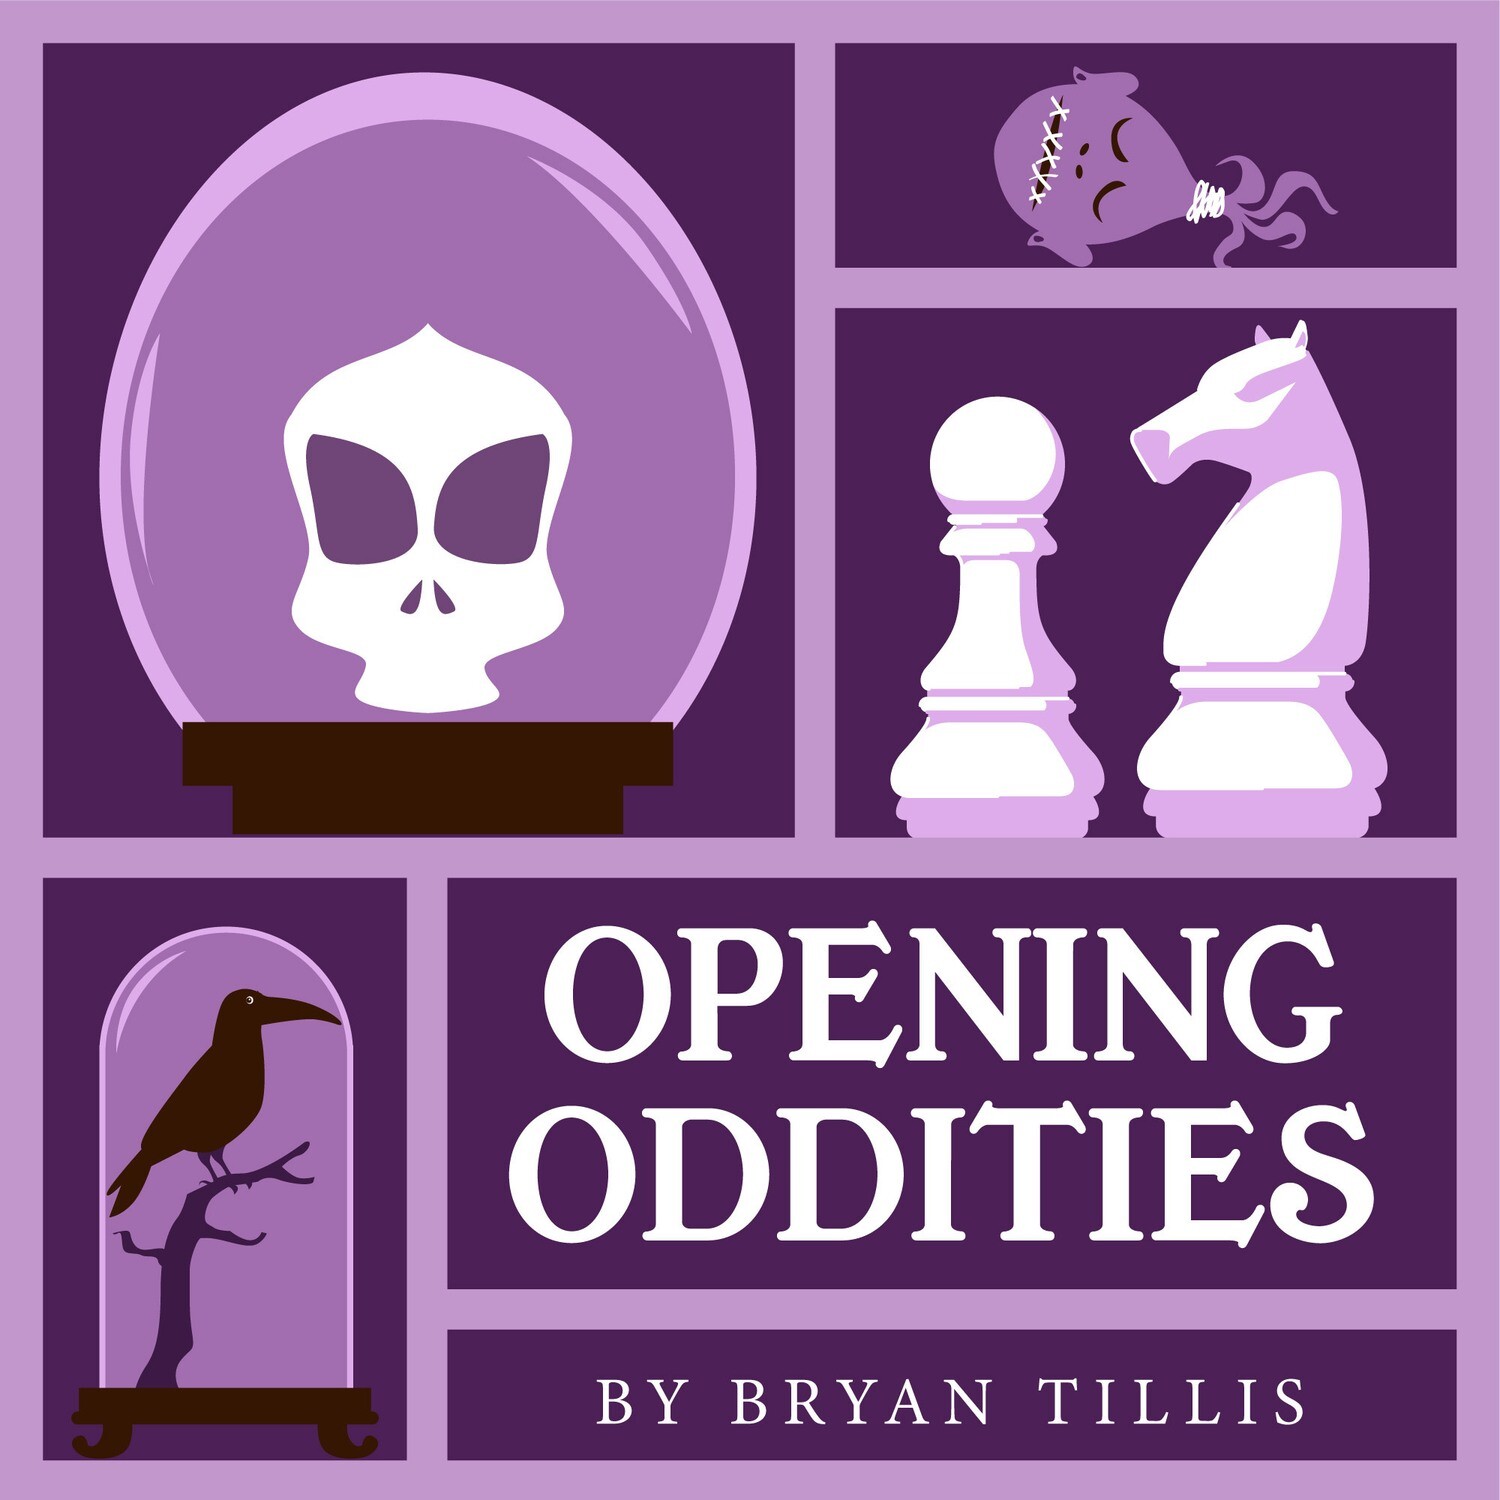 Opening Oddities